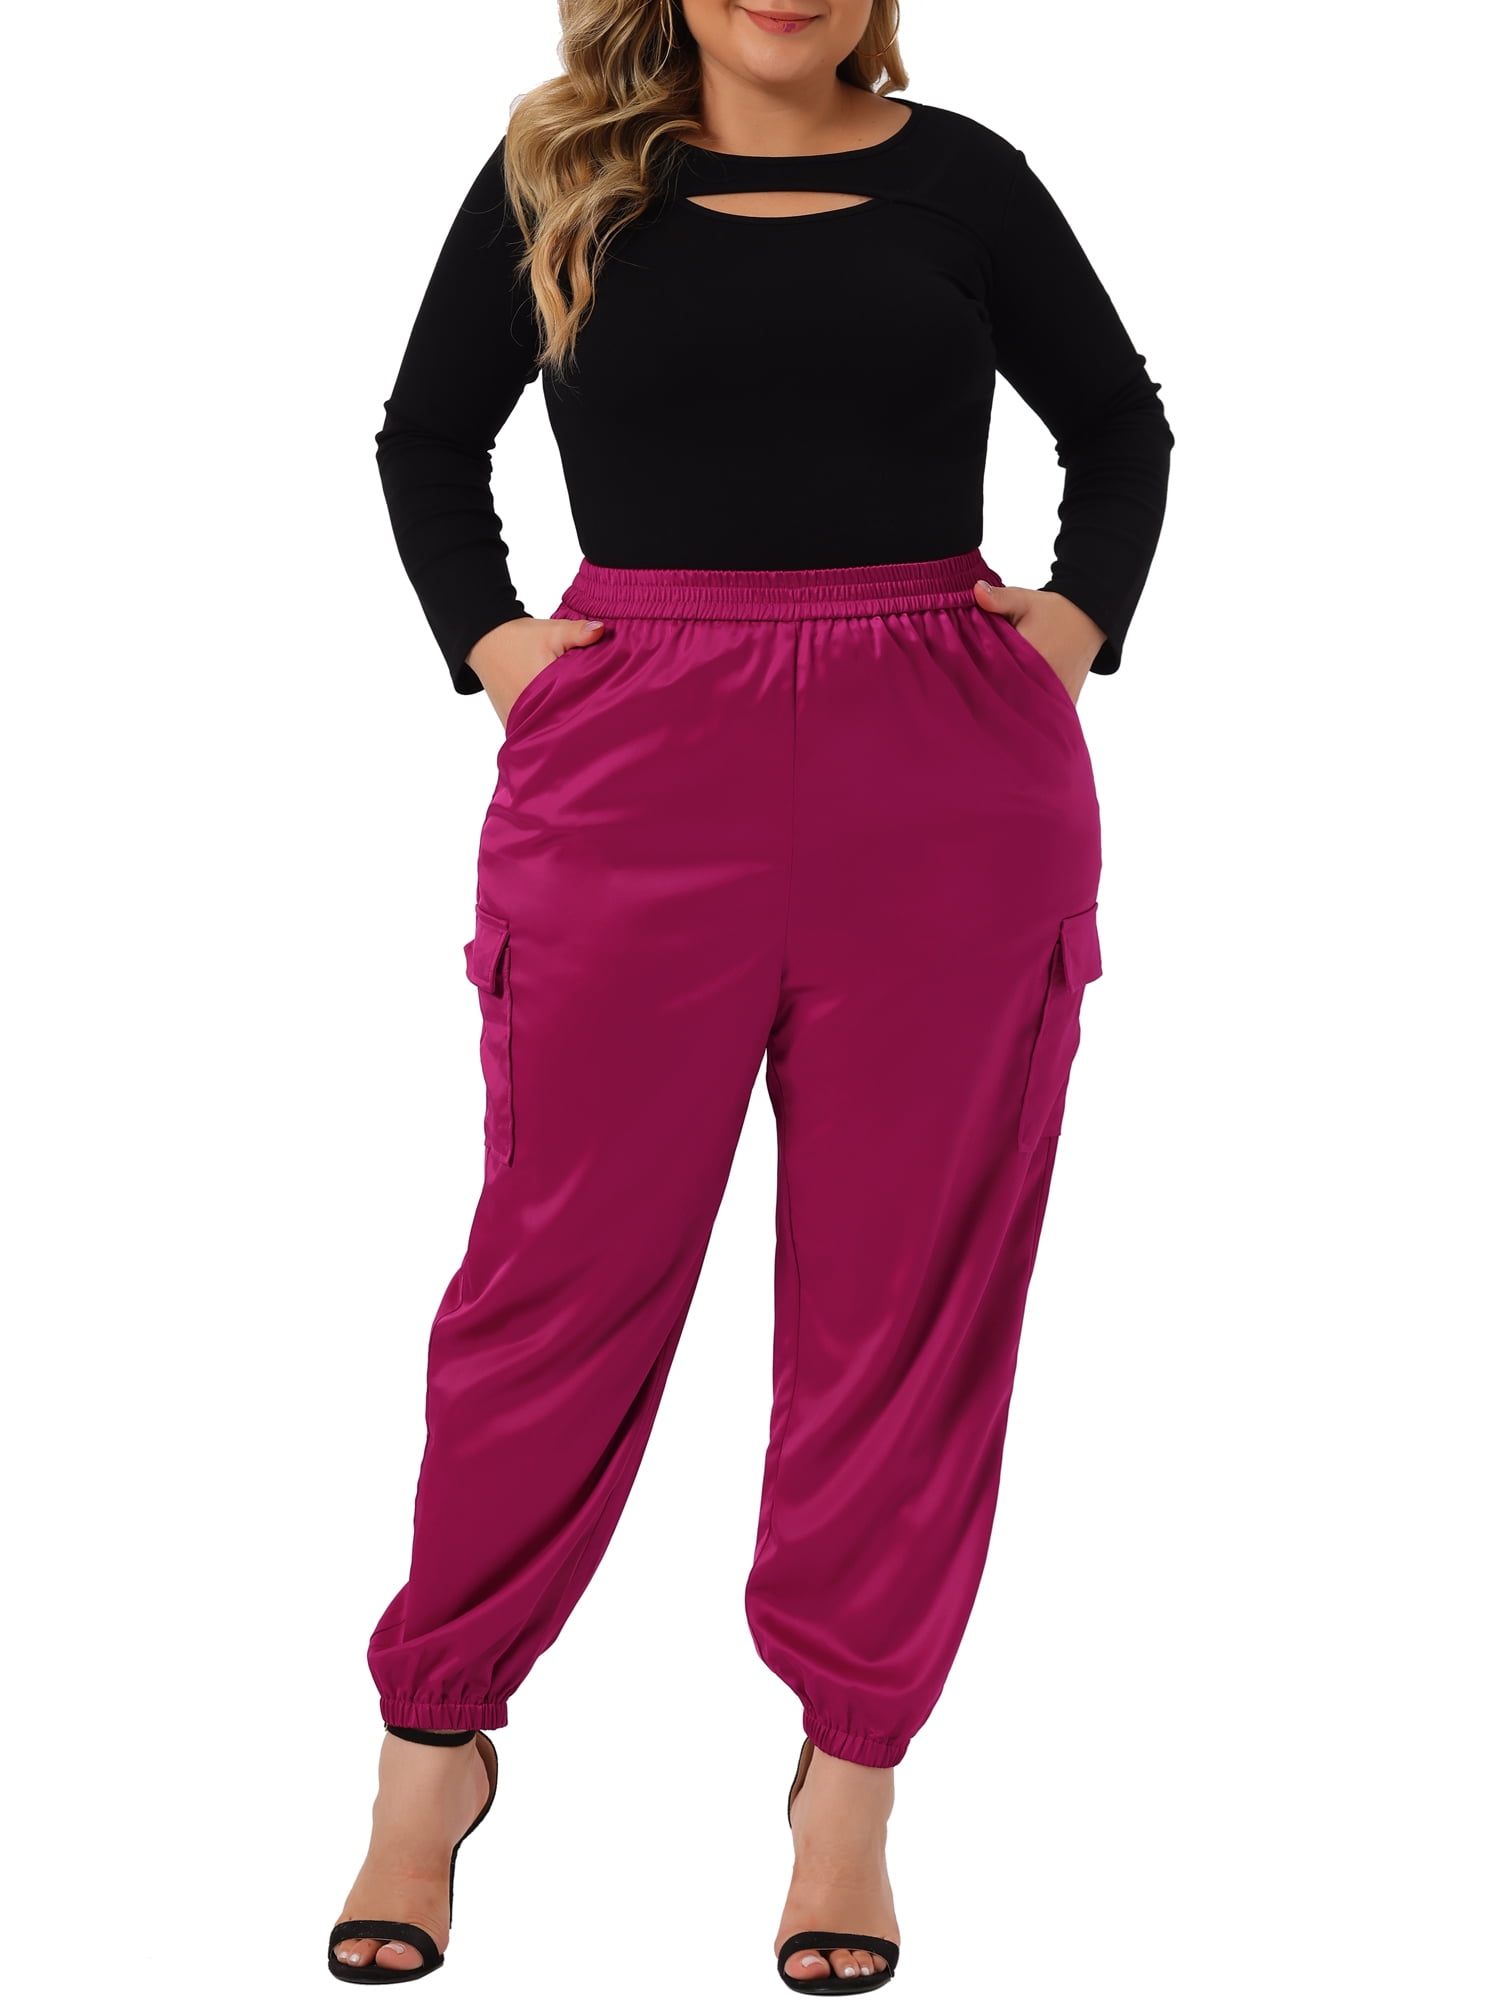 women cotton jogger pants plus size 2xl-6xl new stock available malaysia